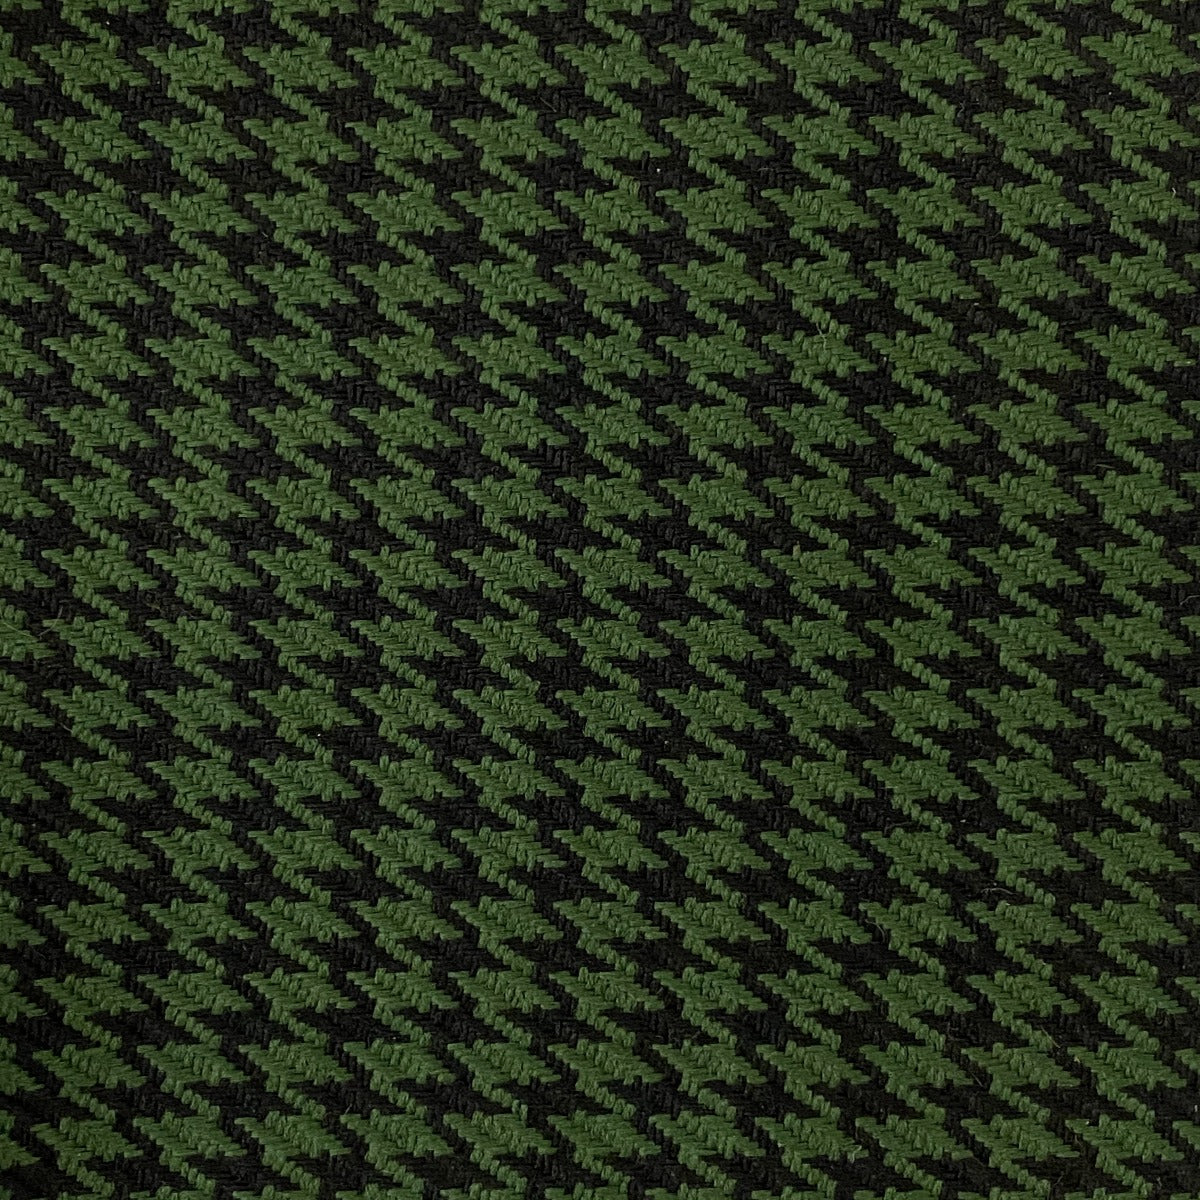 Green Black Acrylic Houndstooth Fabric - Fashion Fabrics Los Angeles 